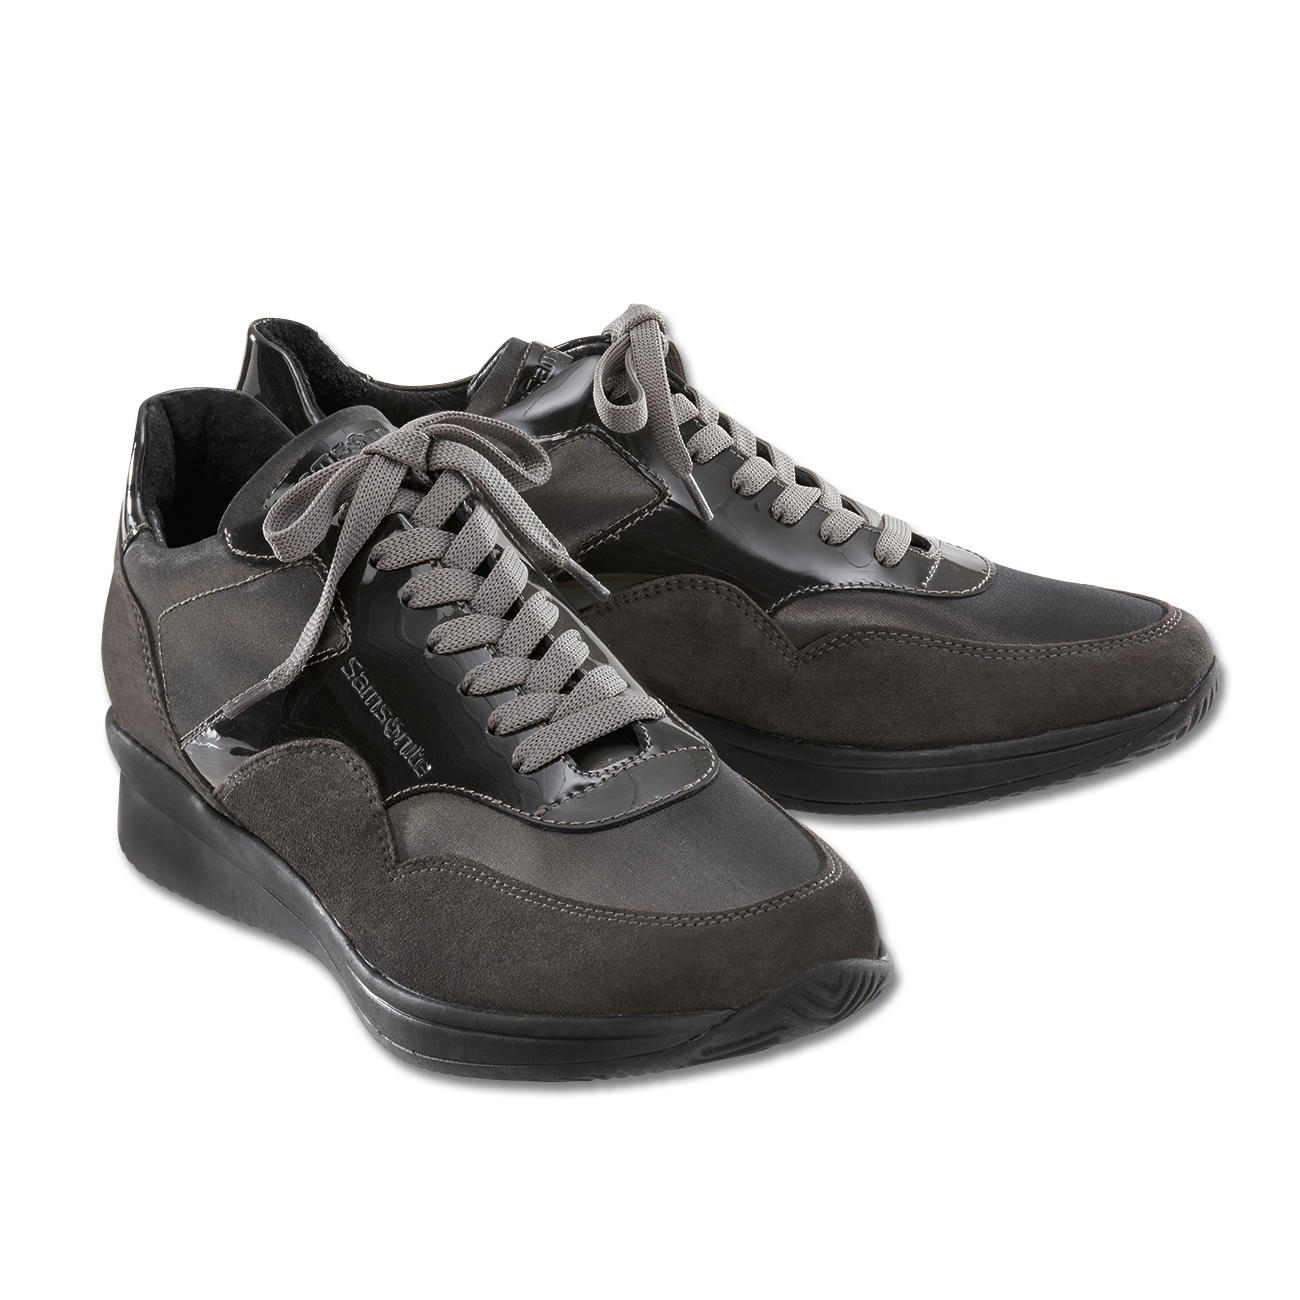 Samsonite Footwear Trainers “Satin Anthracite” buy